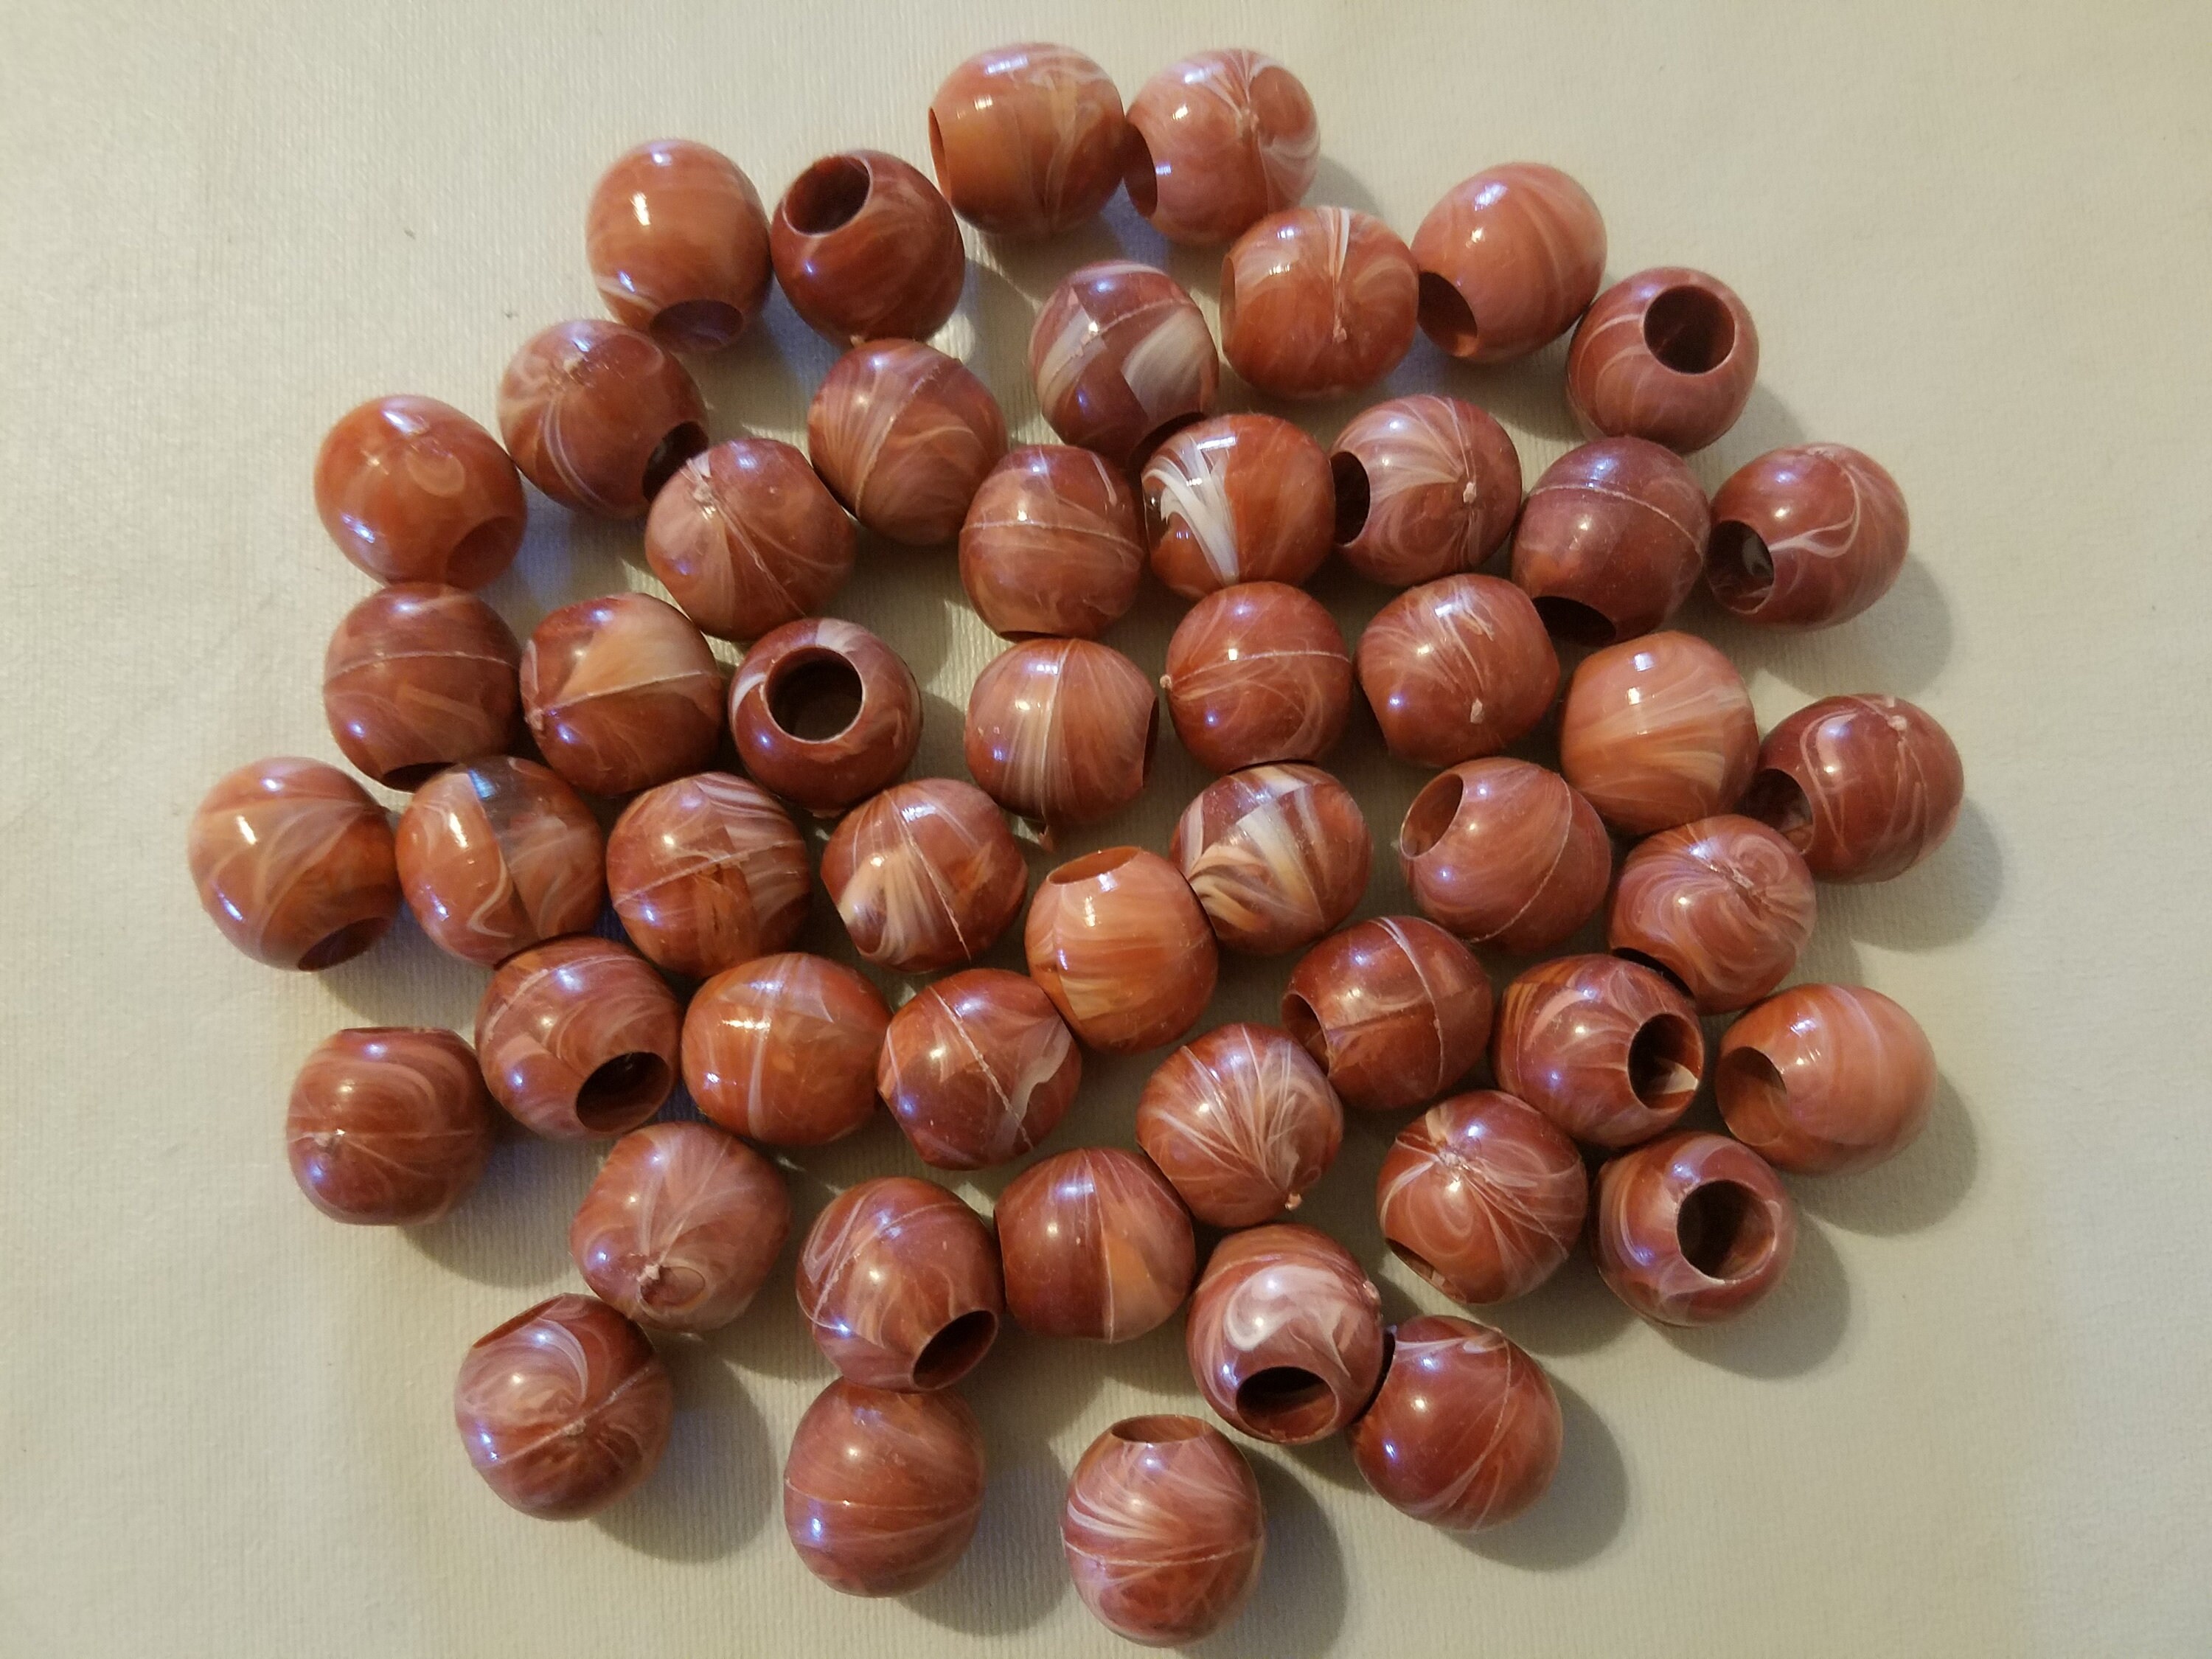 Lot 50 Chocolate Brown Round Plastic Acrylic Marbella Macrame Craft Beads  14mm